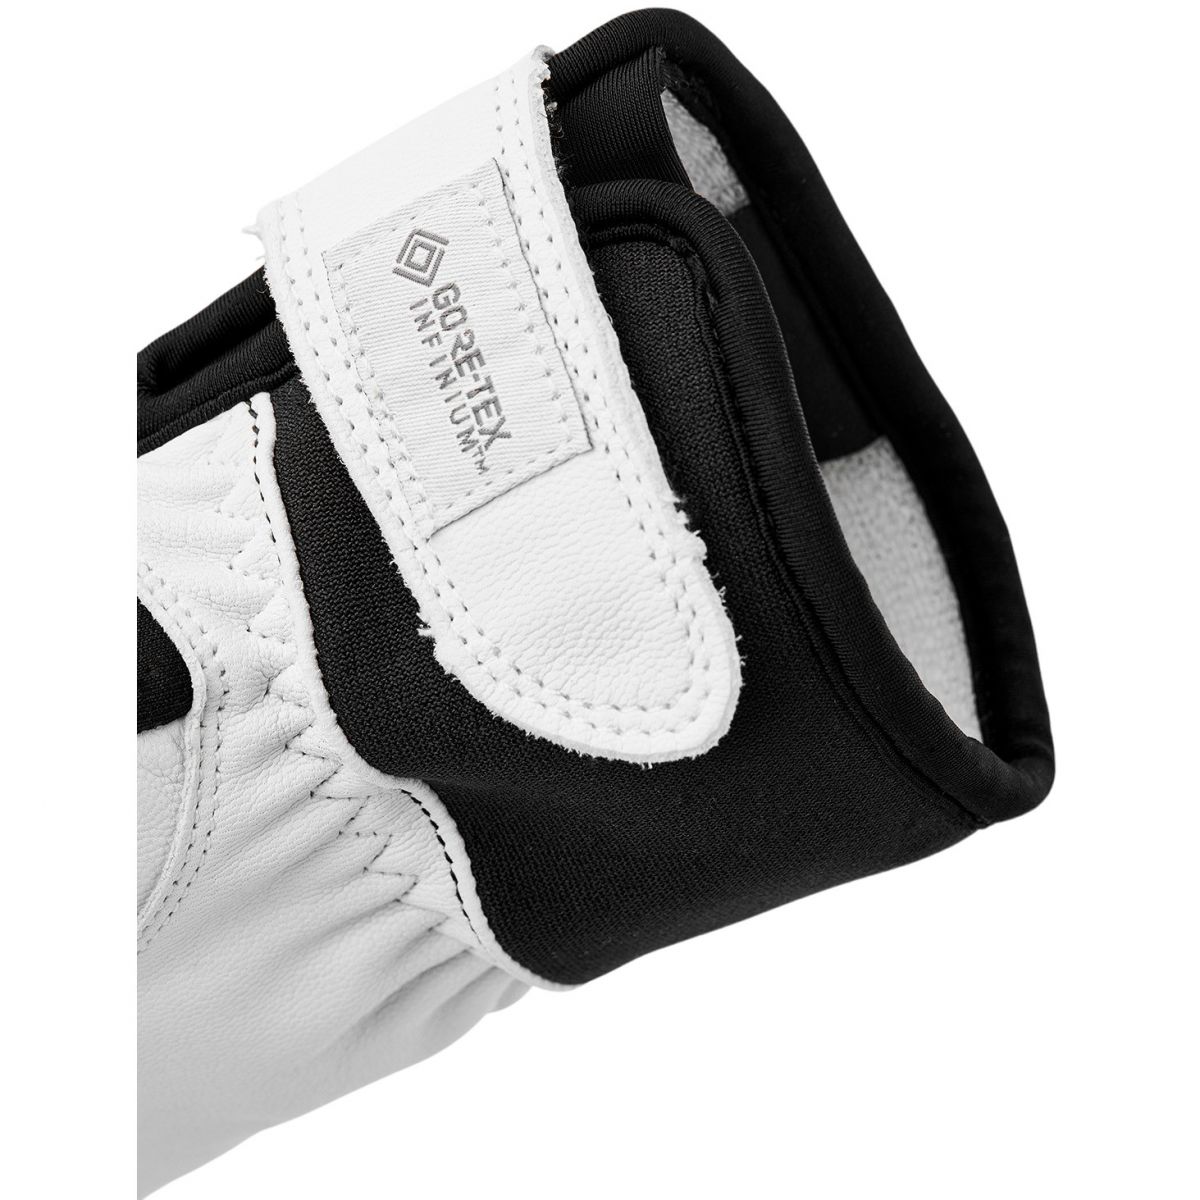 Hestra Ergo Grip Active Wool Terry, gants, noir/blanc